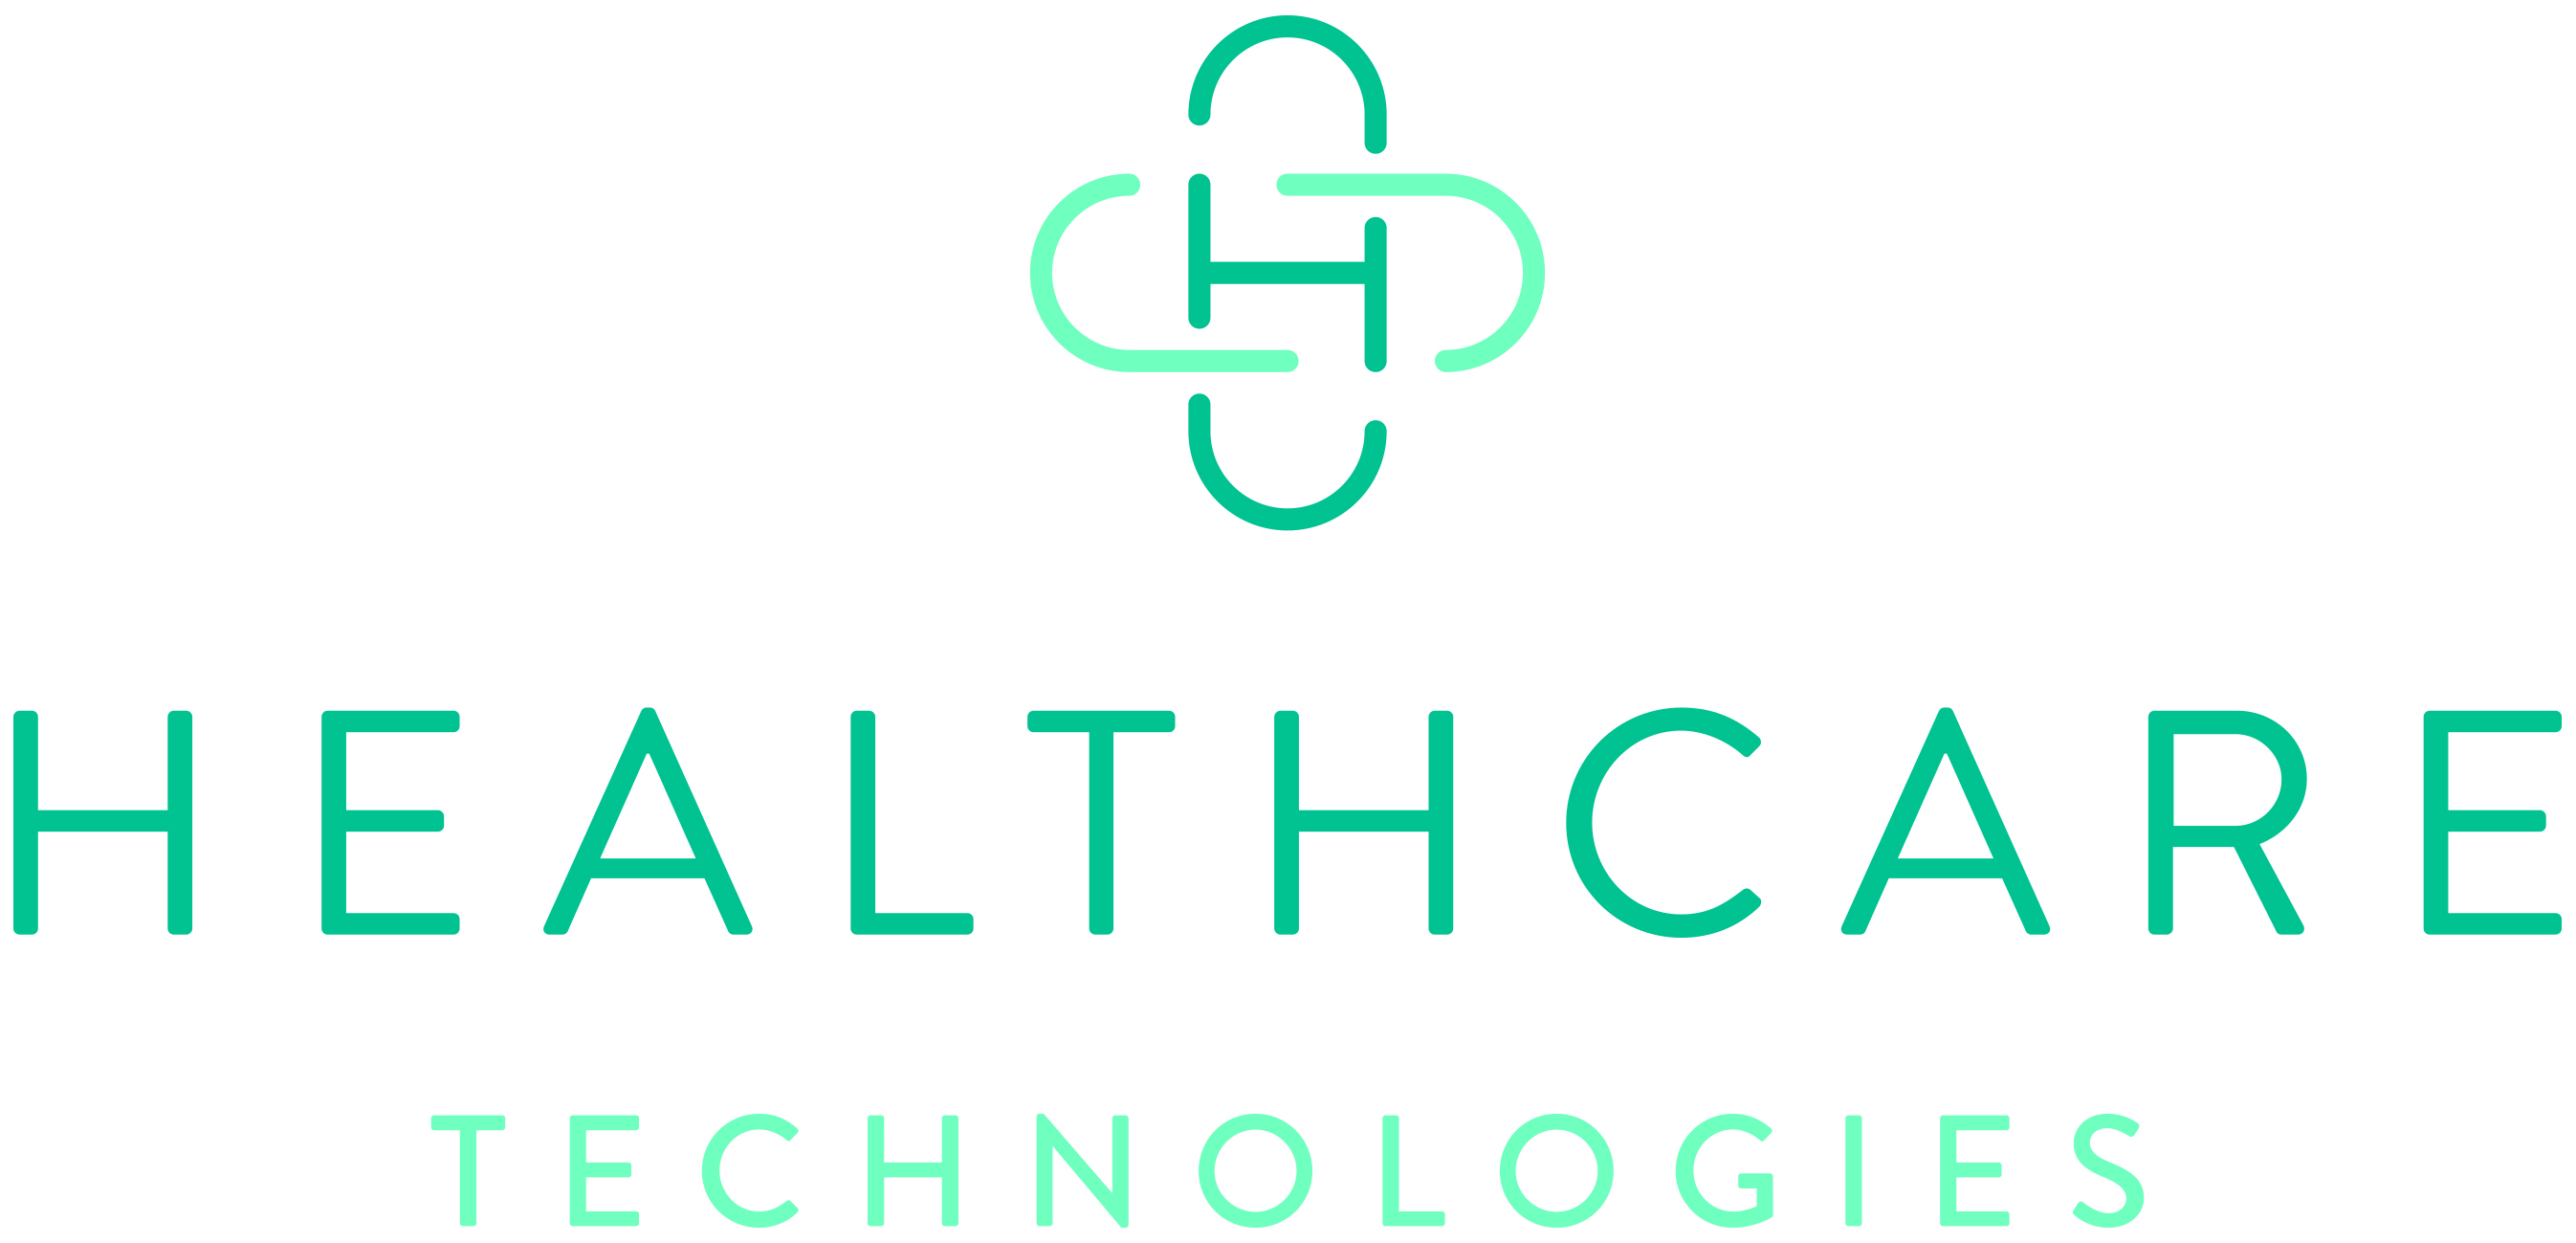 Healthcare Technologies